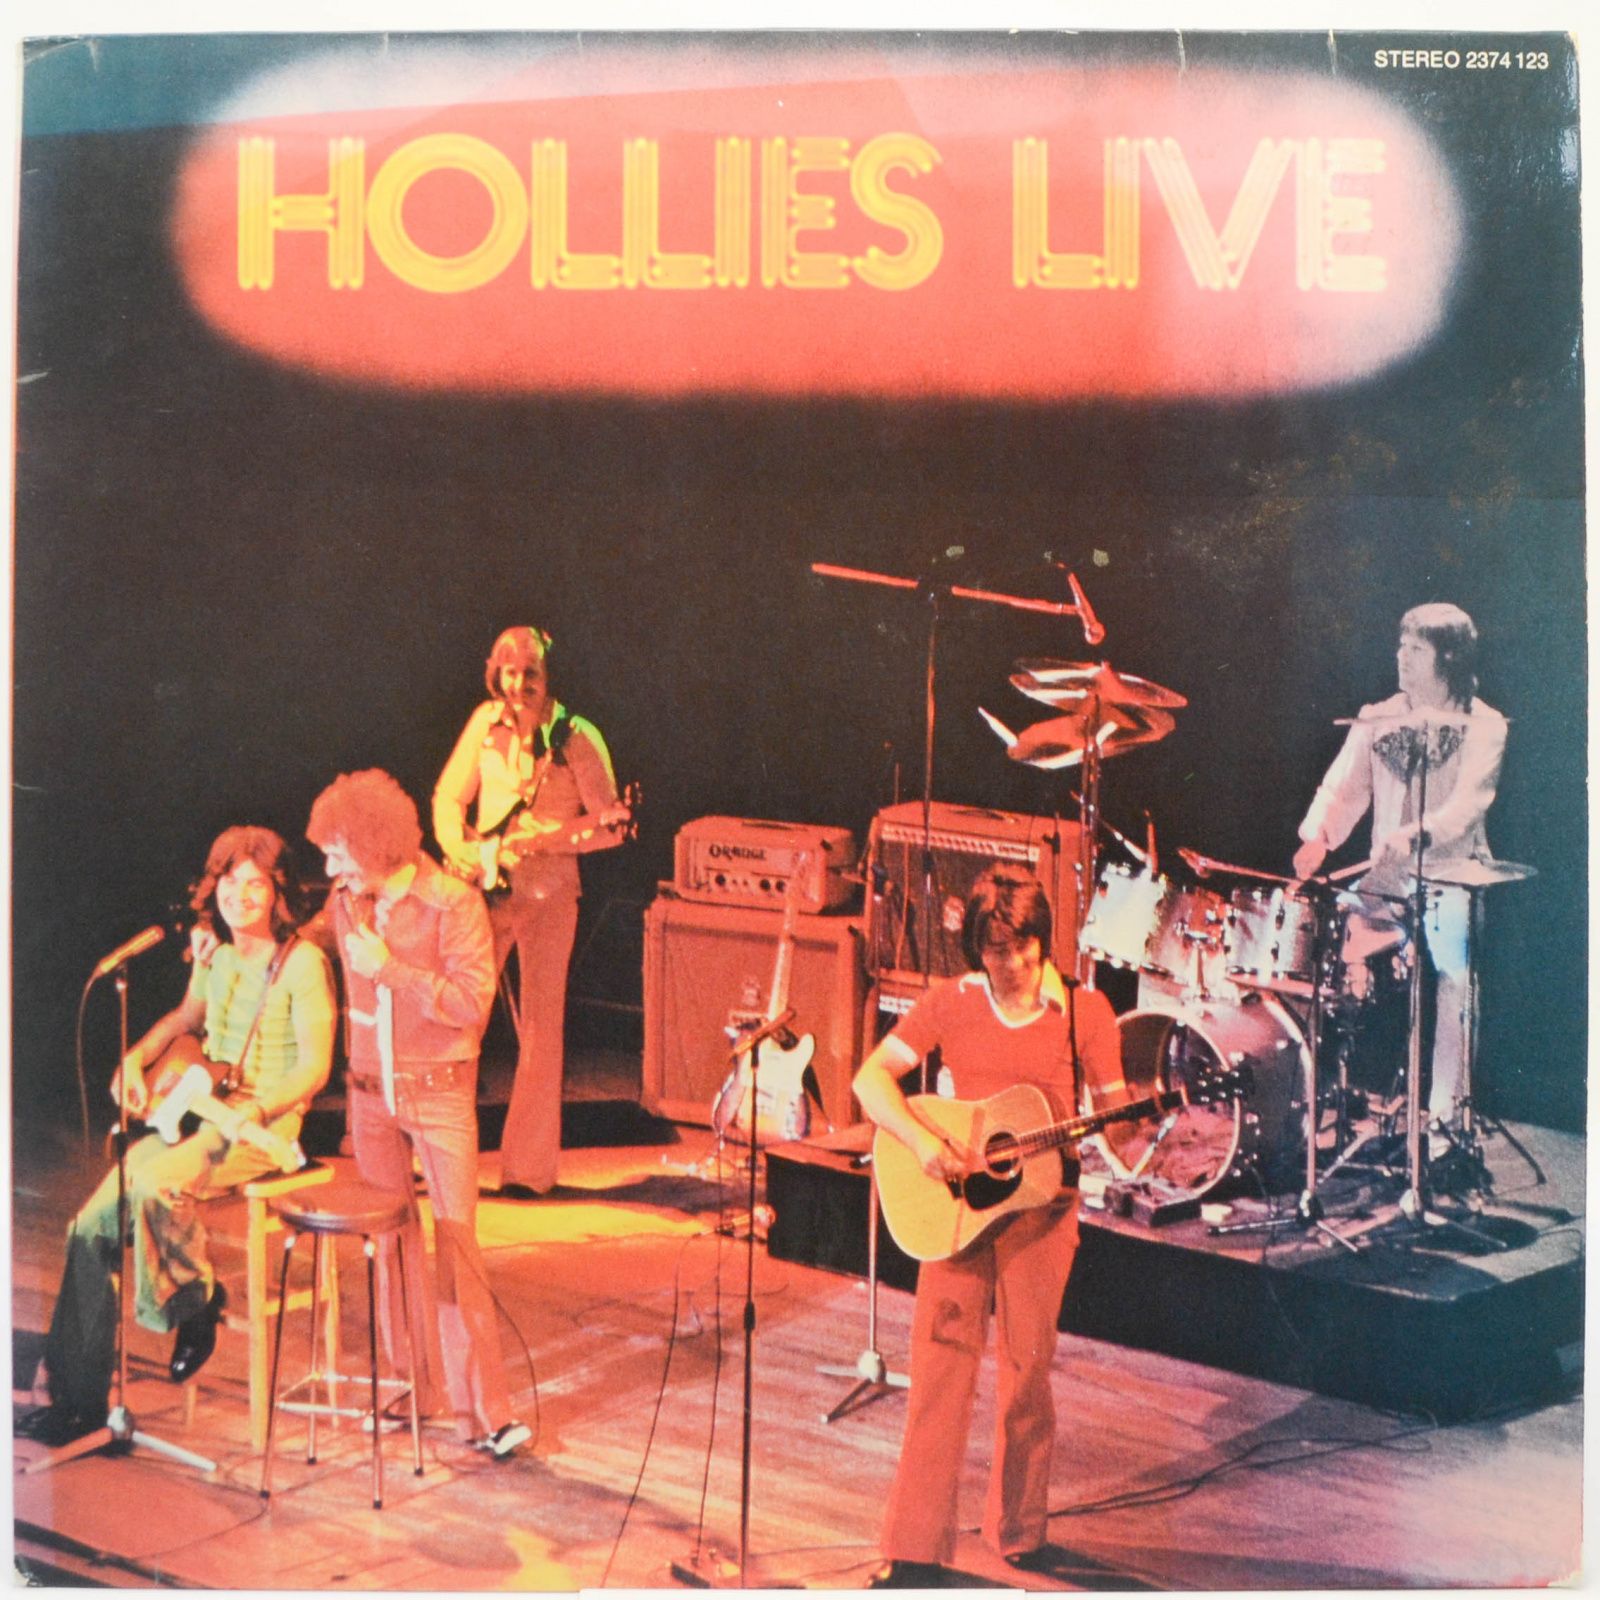 Hollies Live, 1976